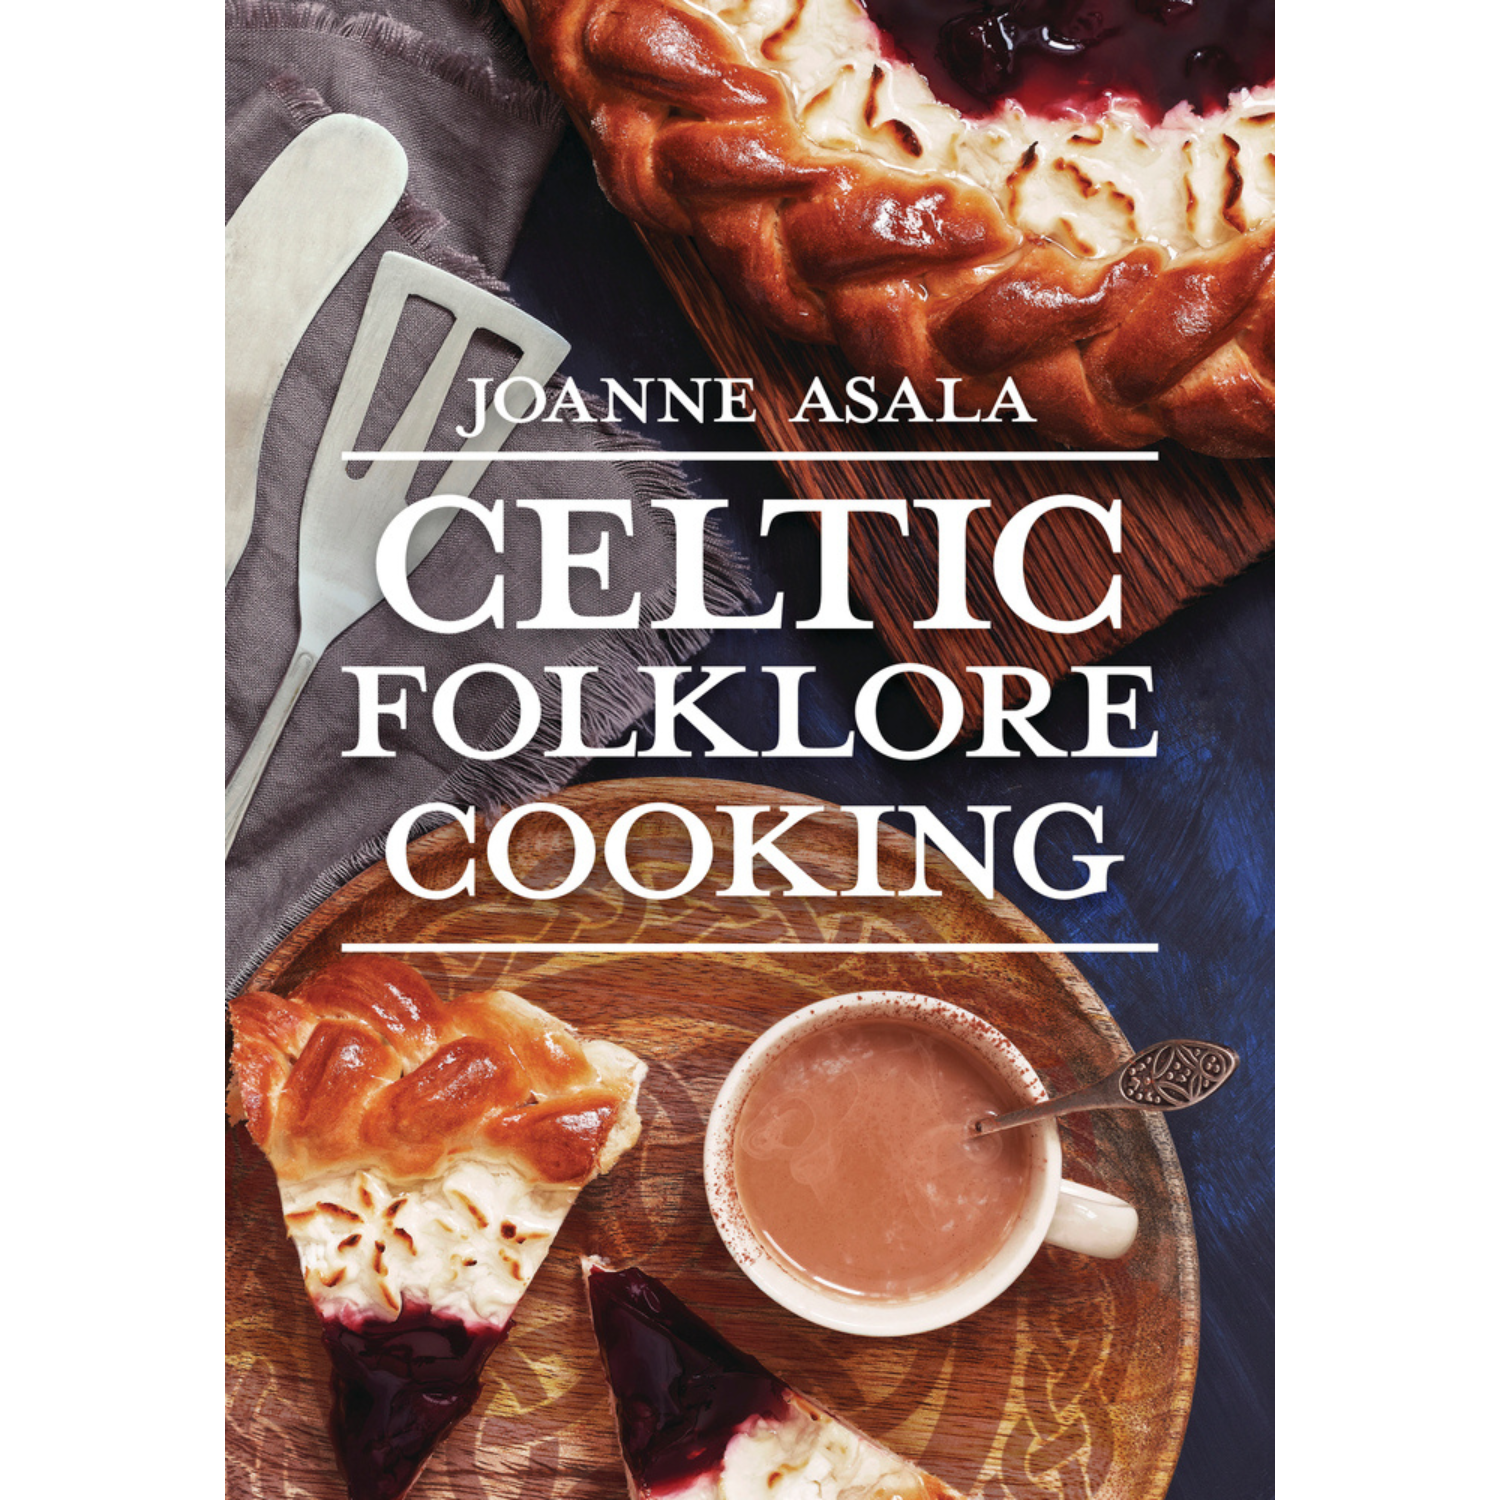 Celtic Folklore Cooking